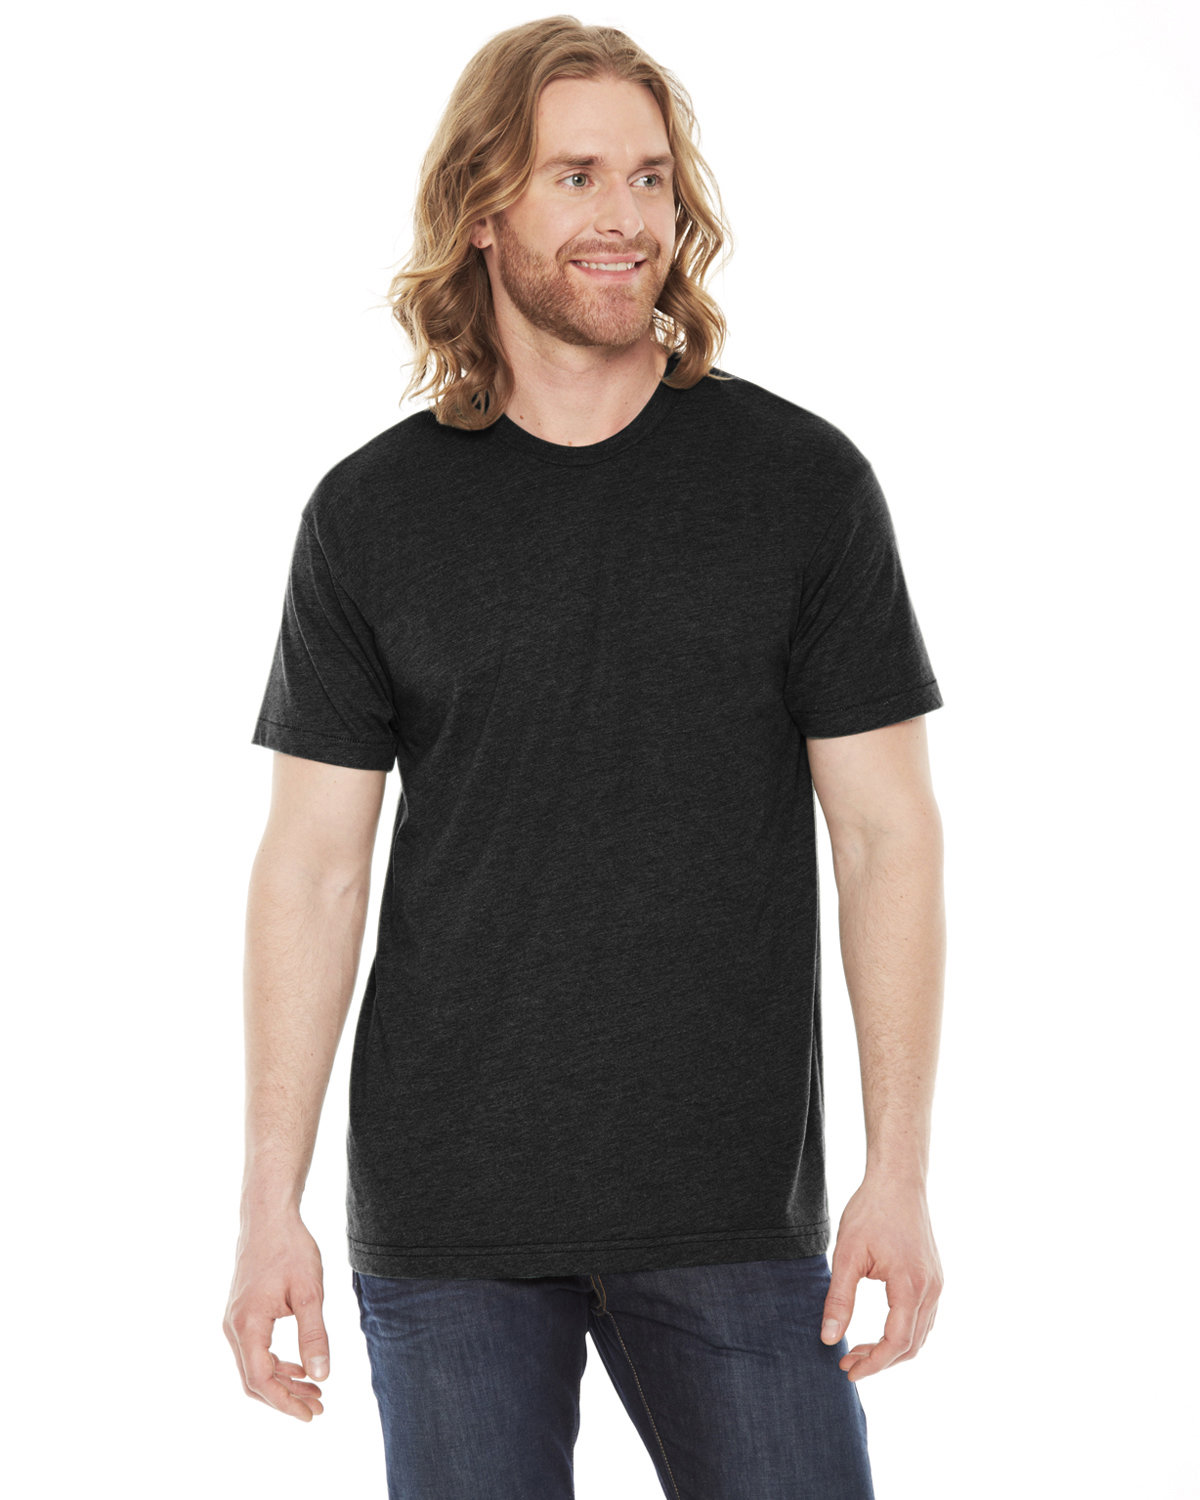 American Apparel Unisex Classic T-Shirt HEATHER BLACK 